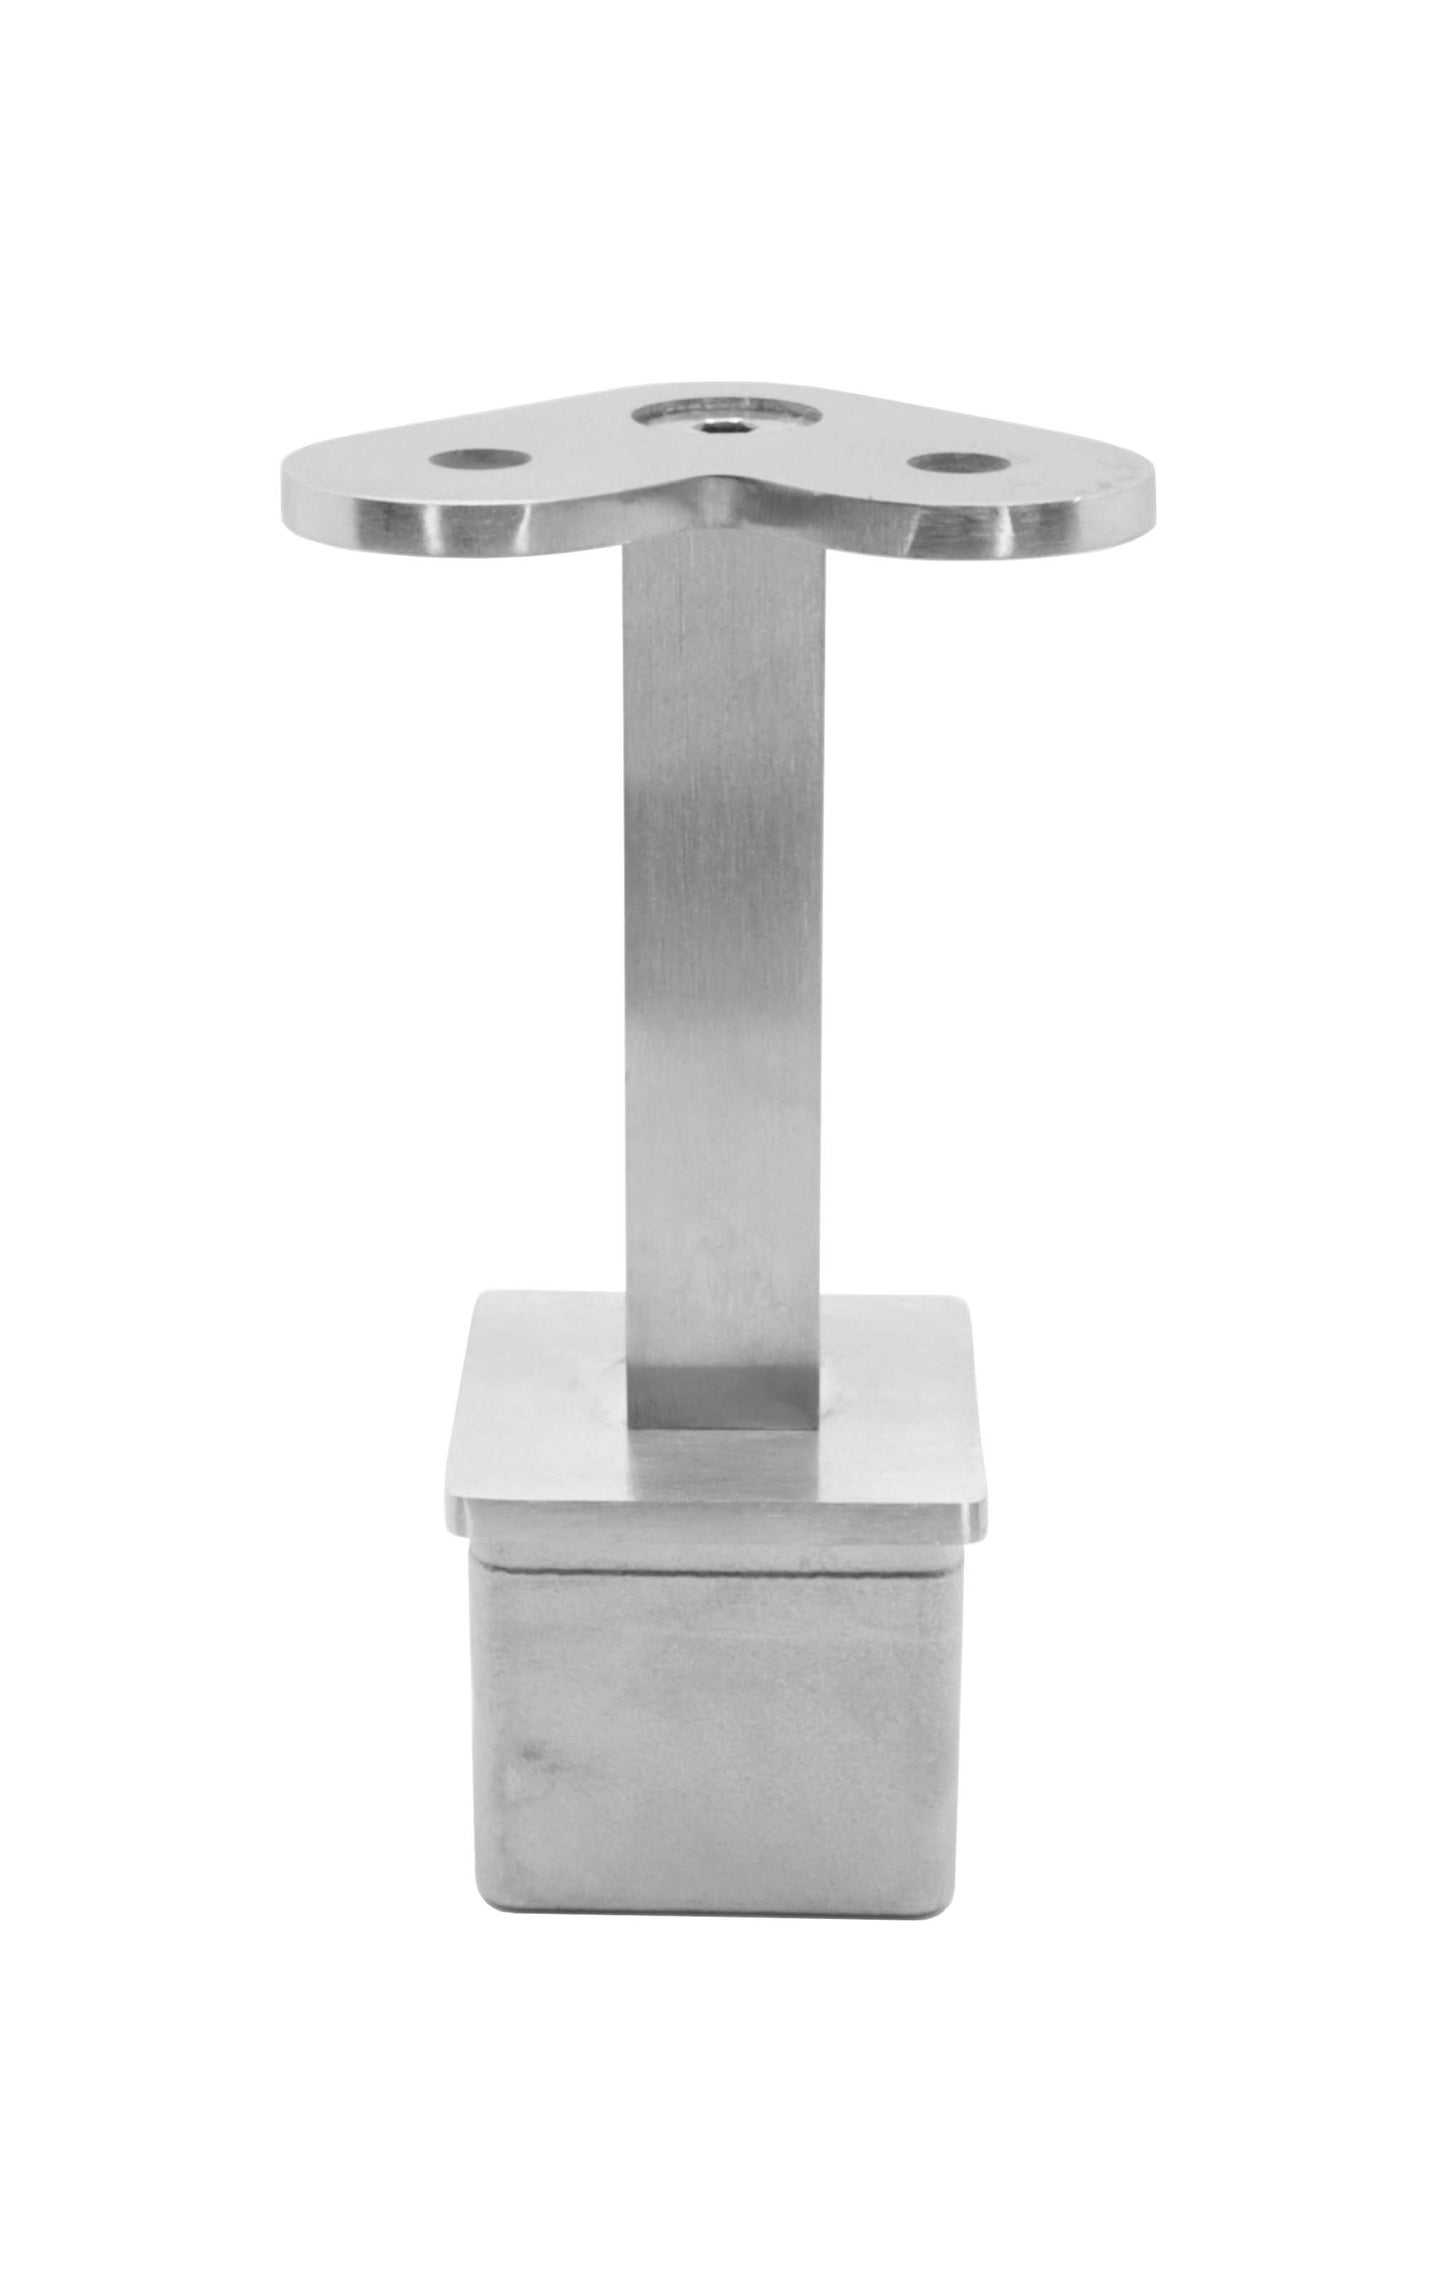 90 Degree Square Stem Post Handrail Bracket Stainless Steel for 1-1/2" Post Fitting (P0150-90-TOP-SQUARE) - SHEMONICO